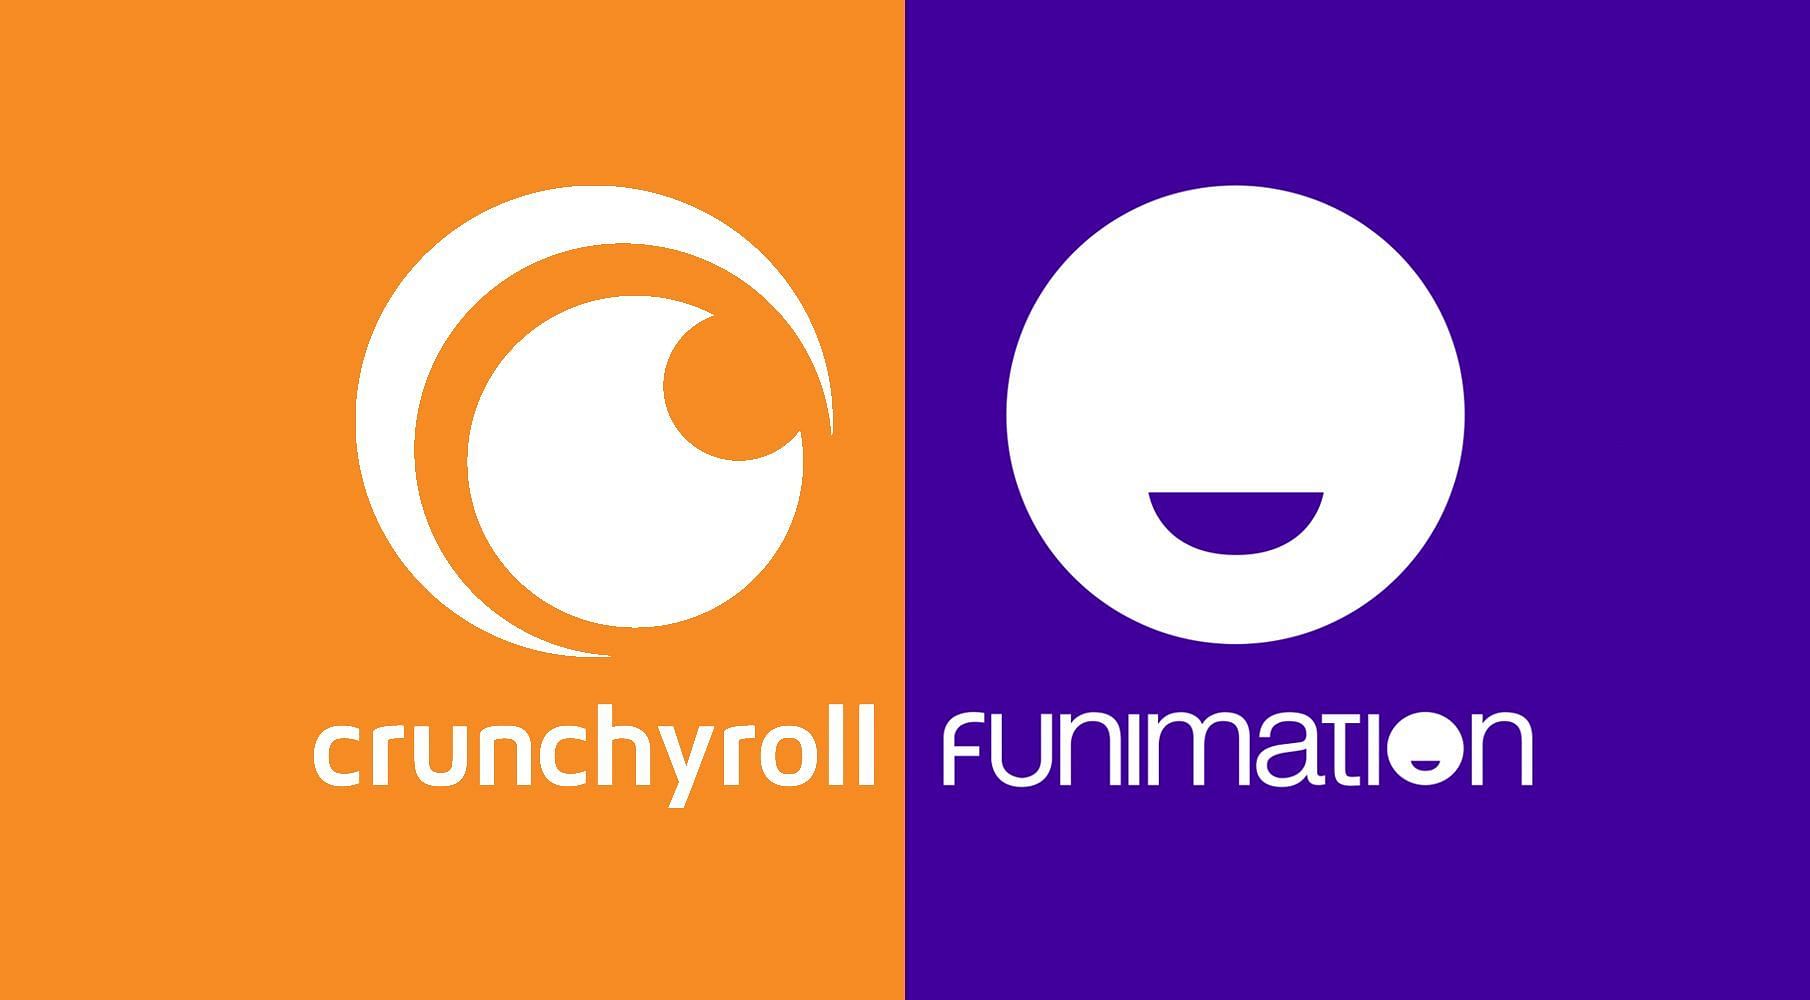 Crunchyroll and Funimation (image via Crunchyroll)